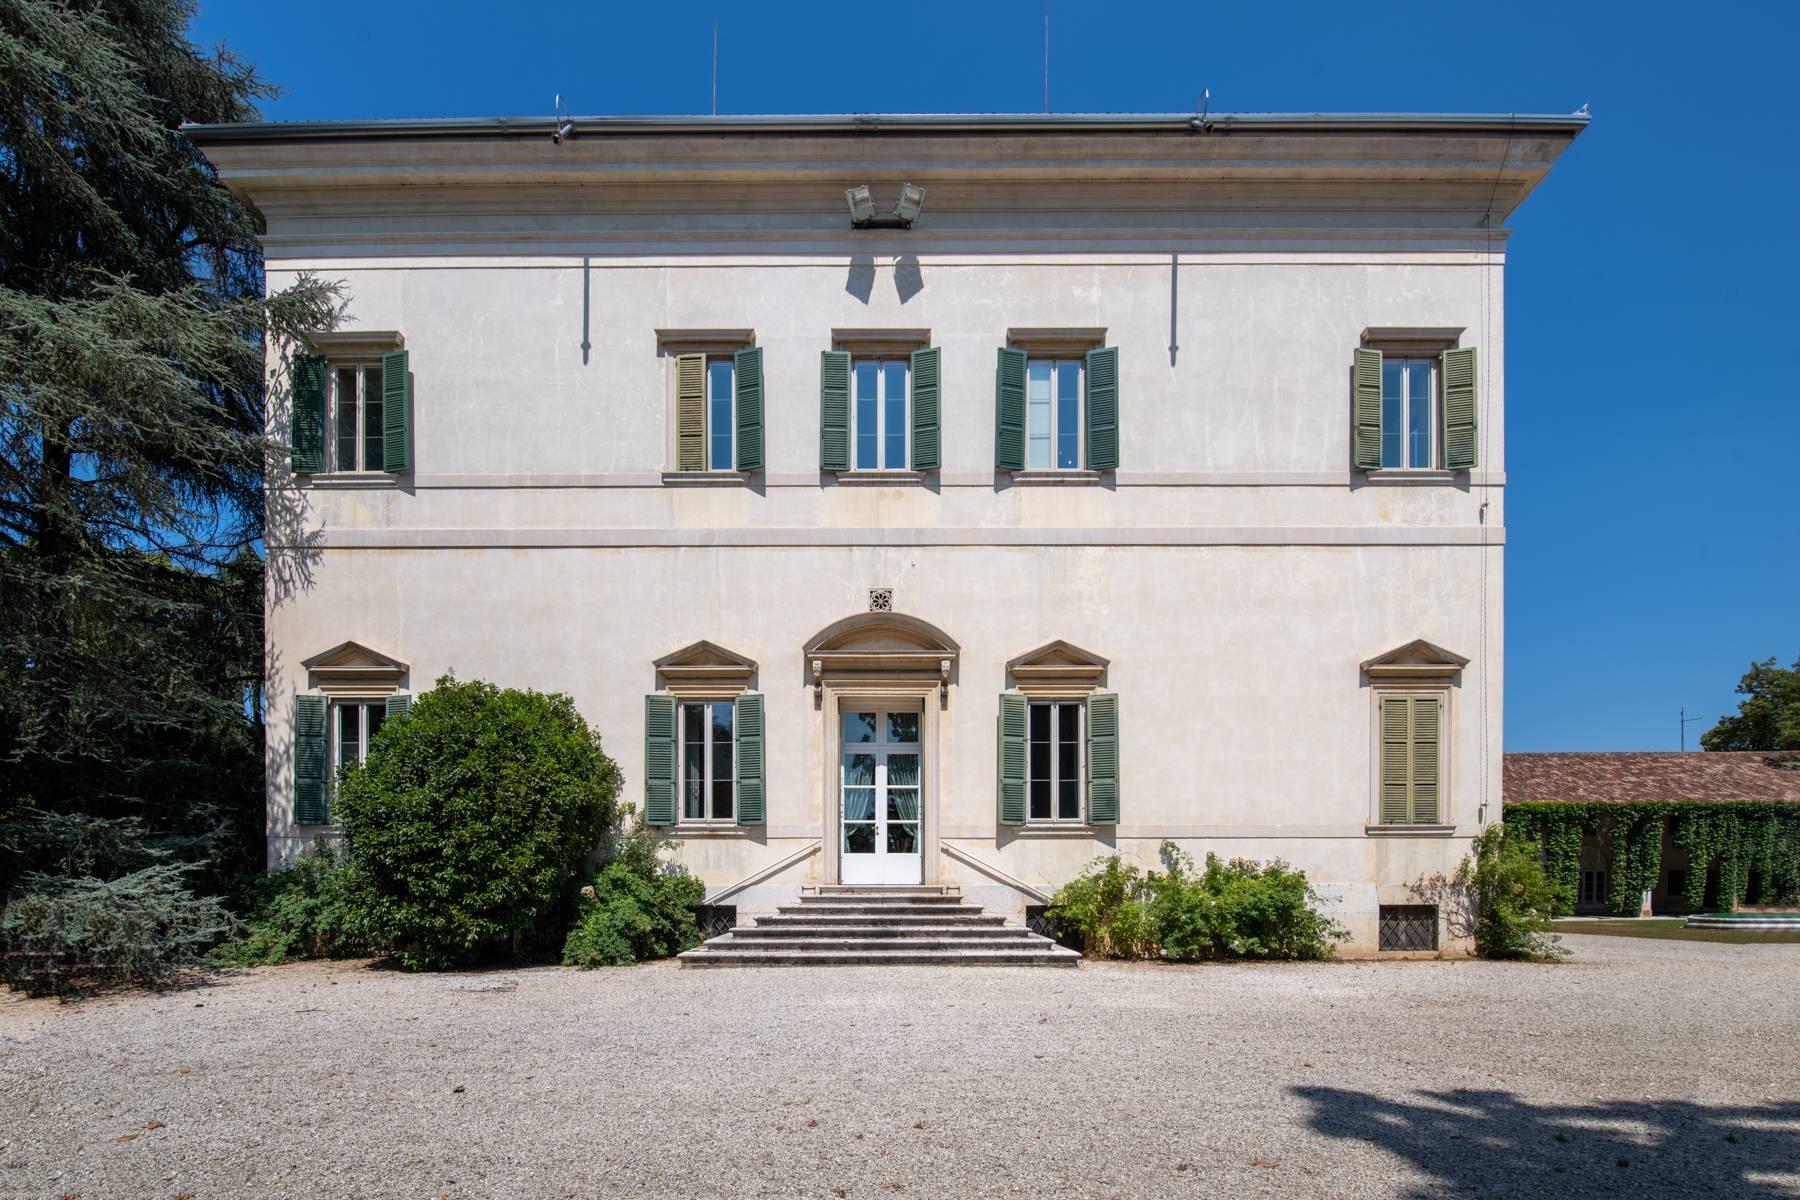 Elegante Villa Veneta con parco romantico e adiacenze - 3